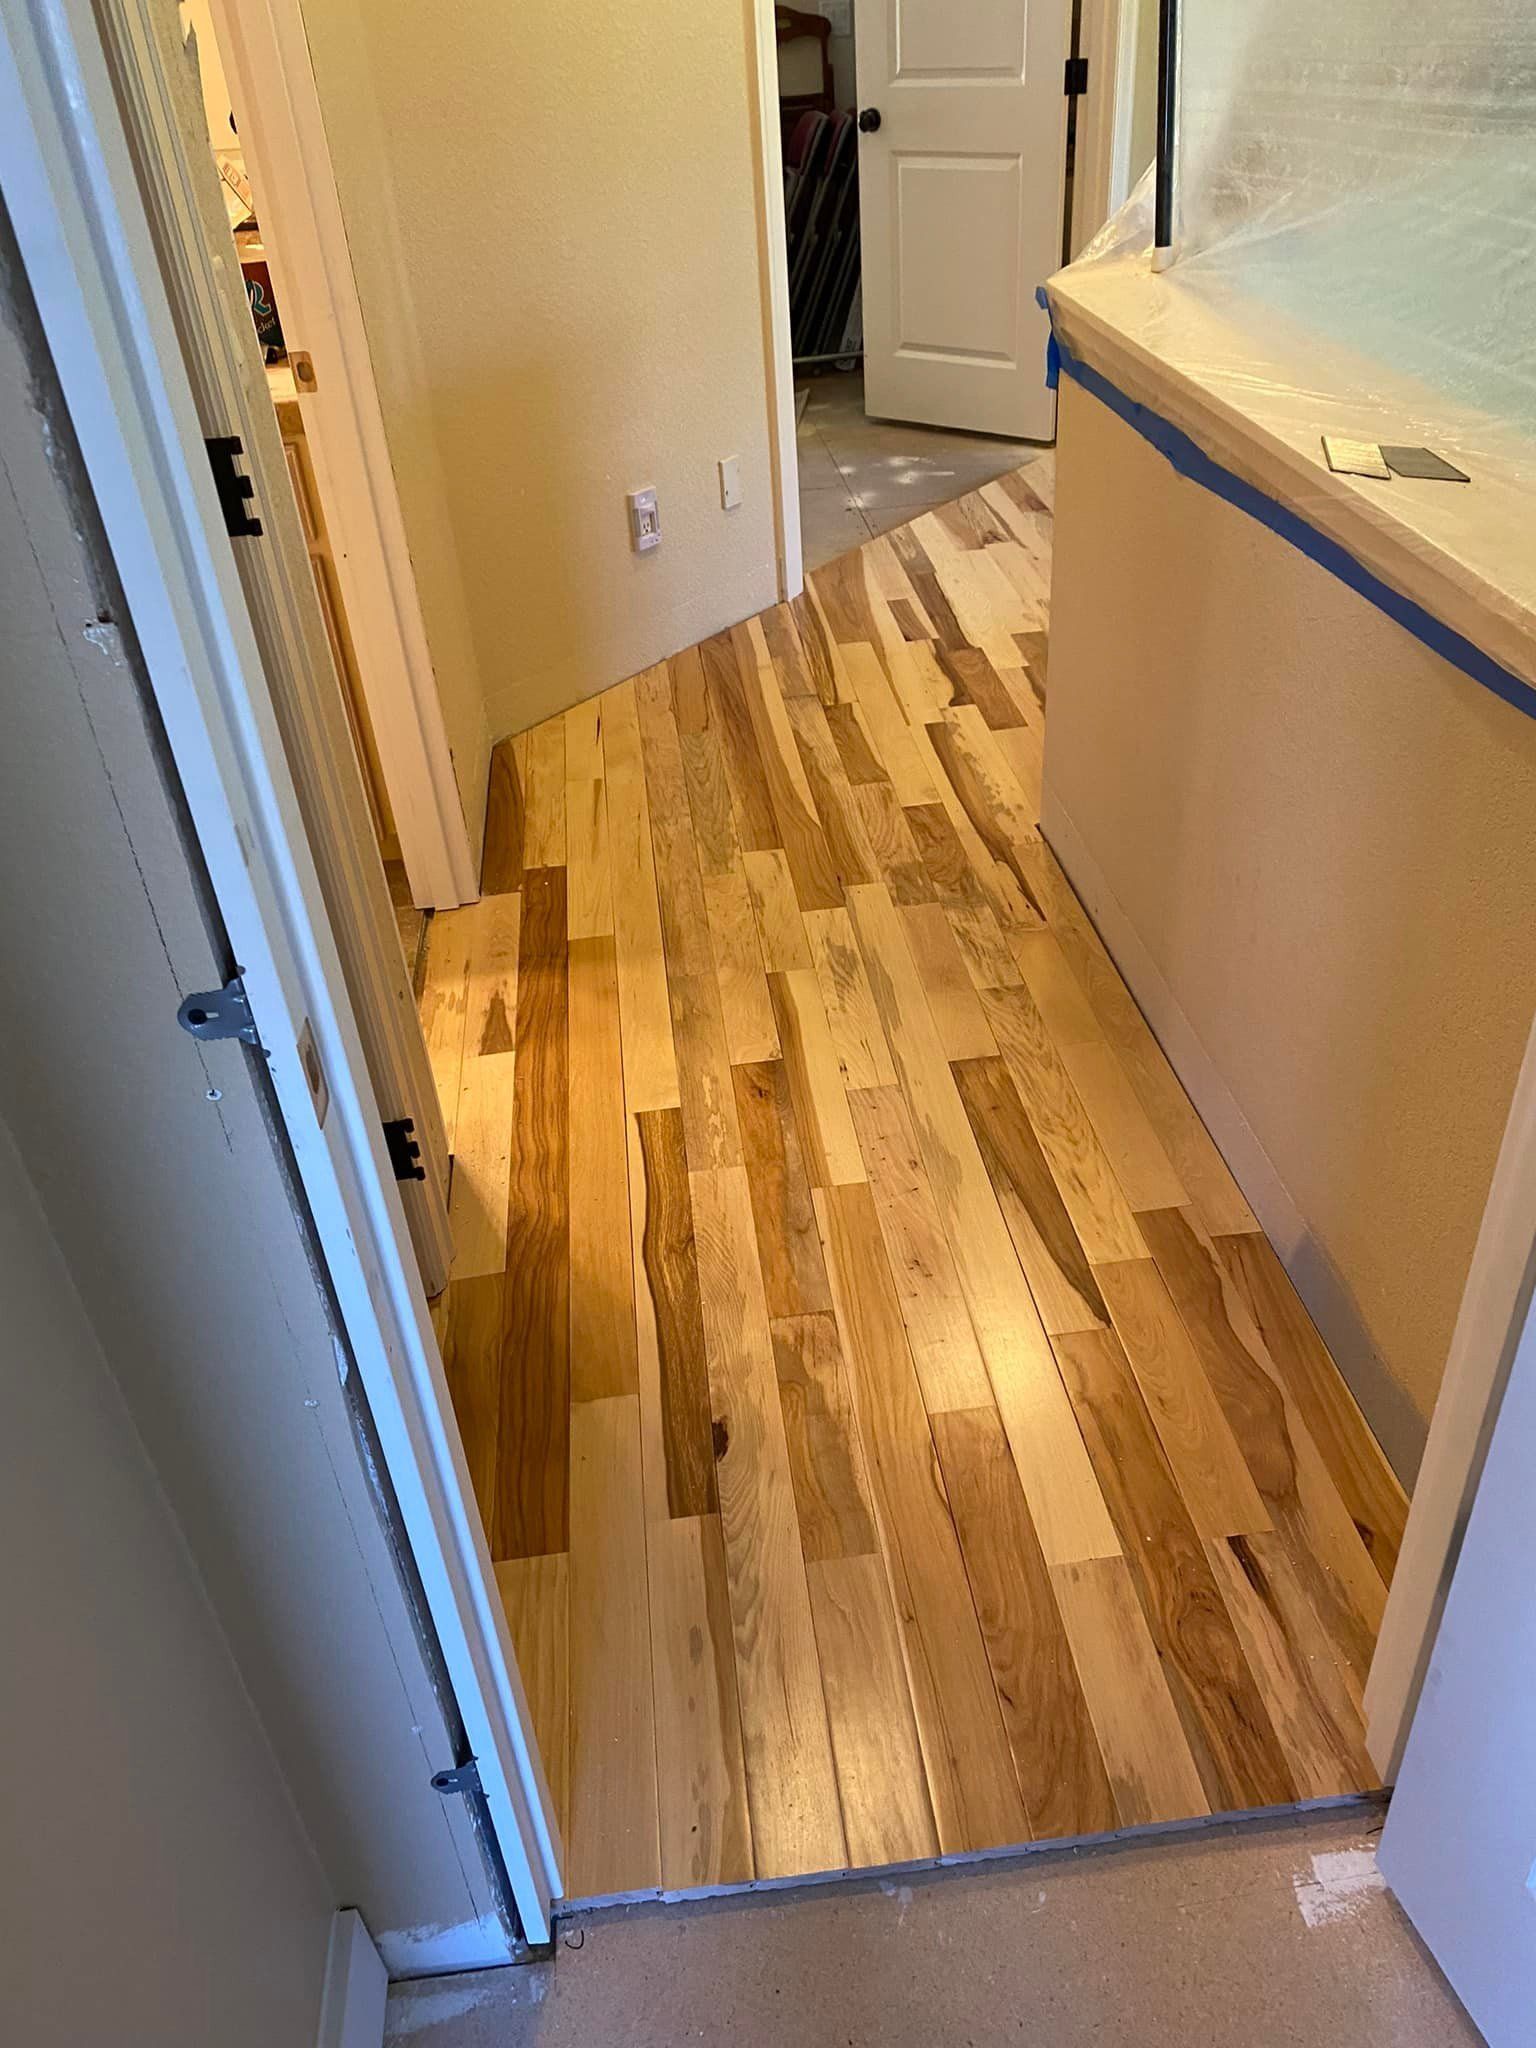 Prefinished hardwood floor looks great in this hallway.